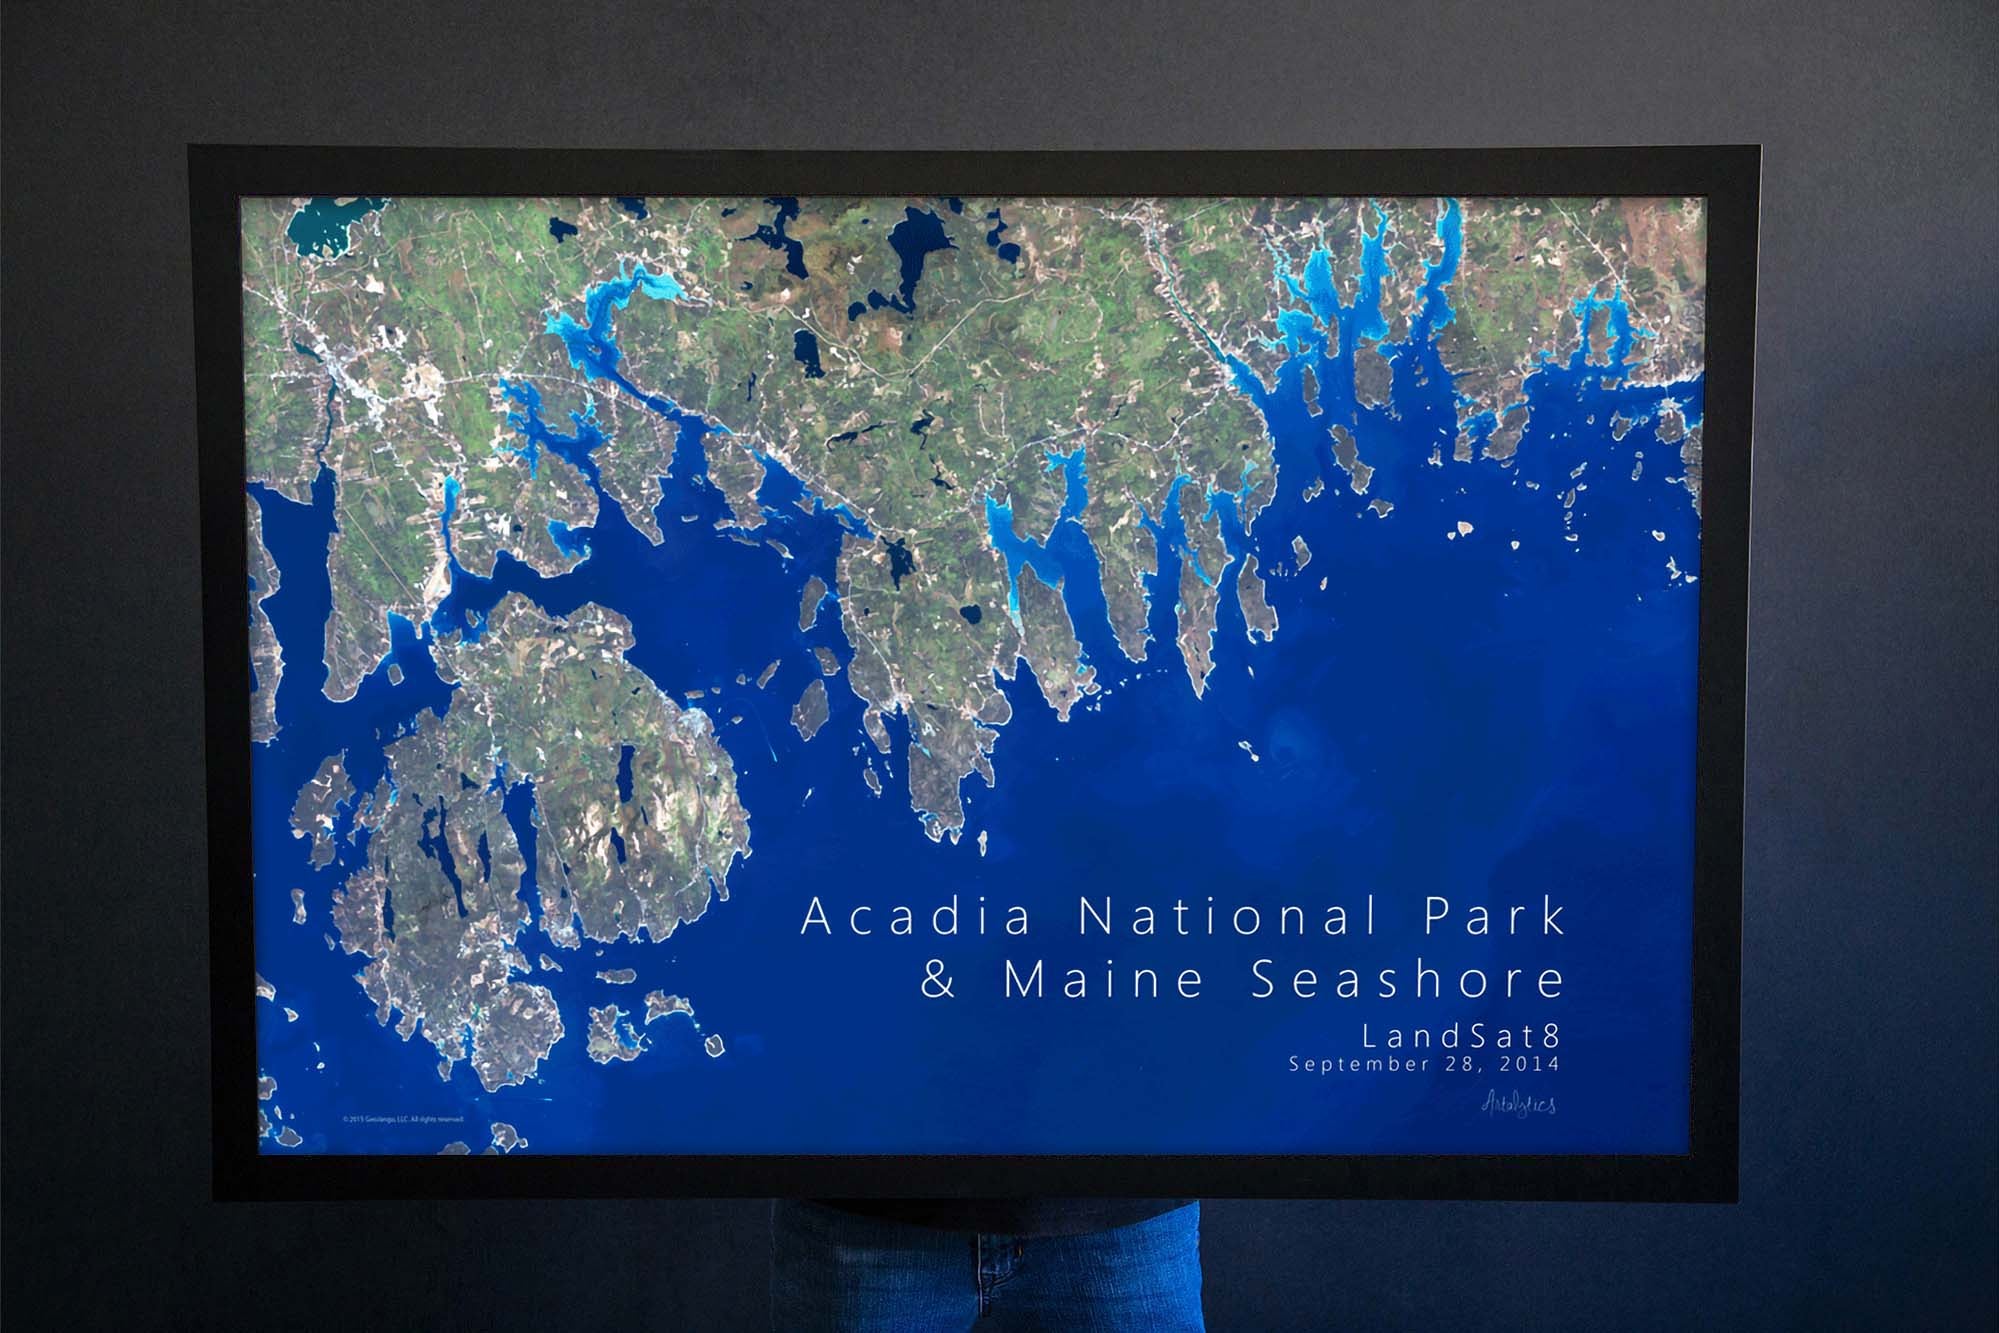 Acadia National park satellite imagery